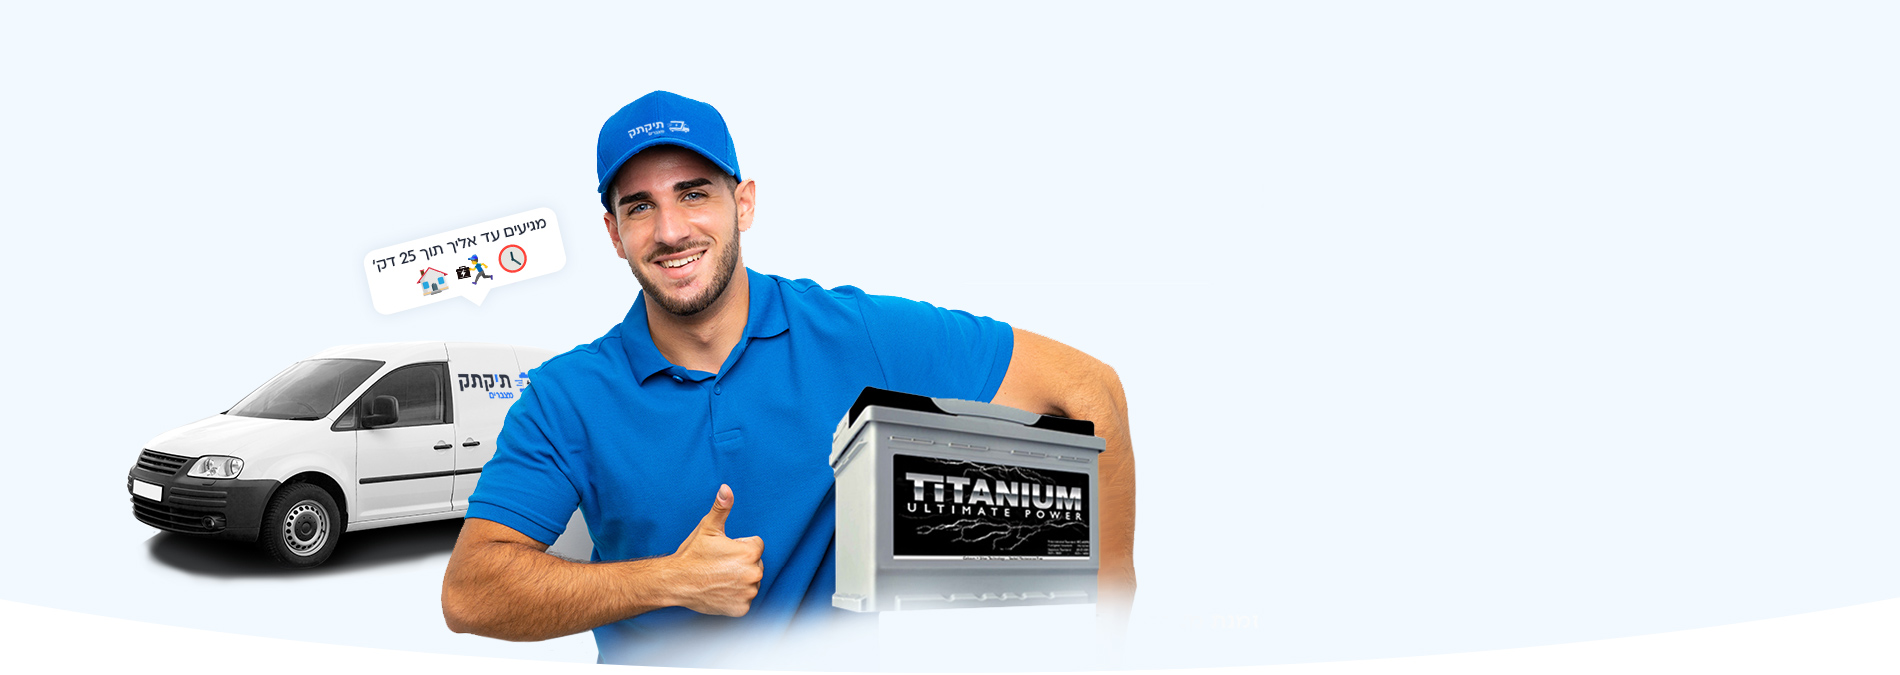 service-producer-titanium